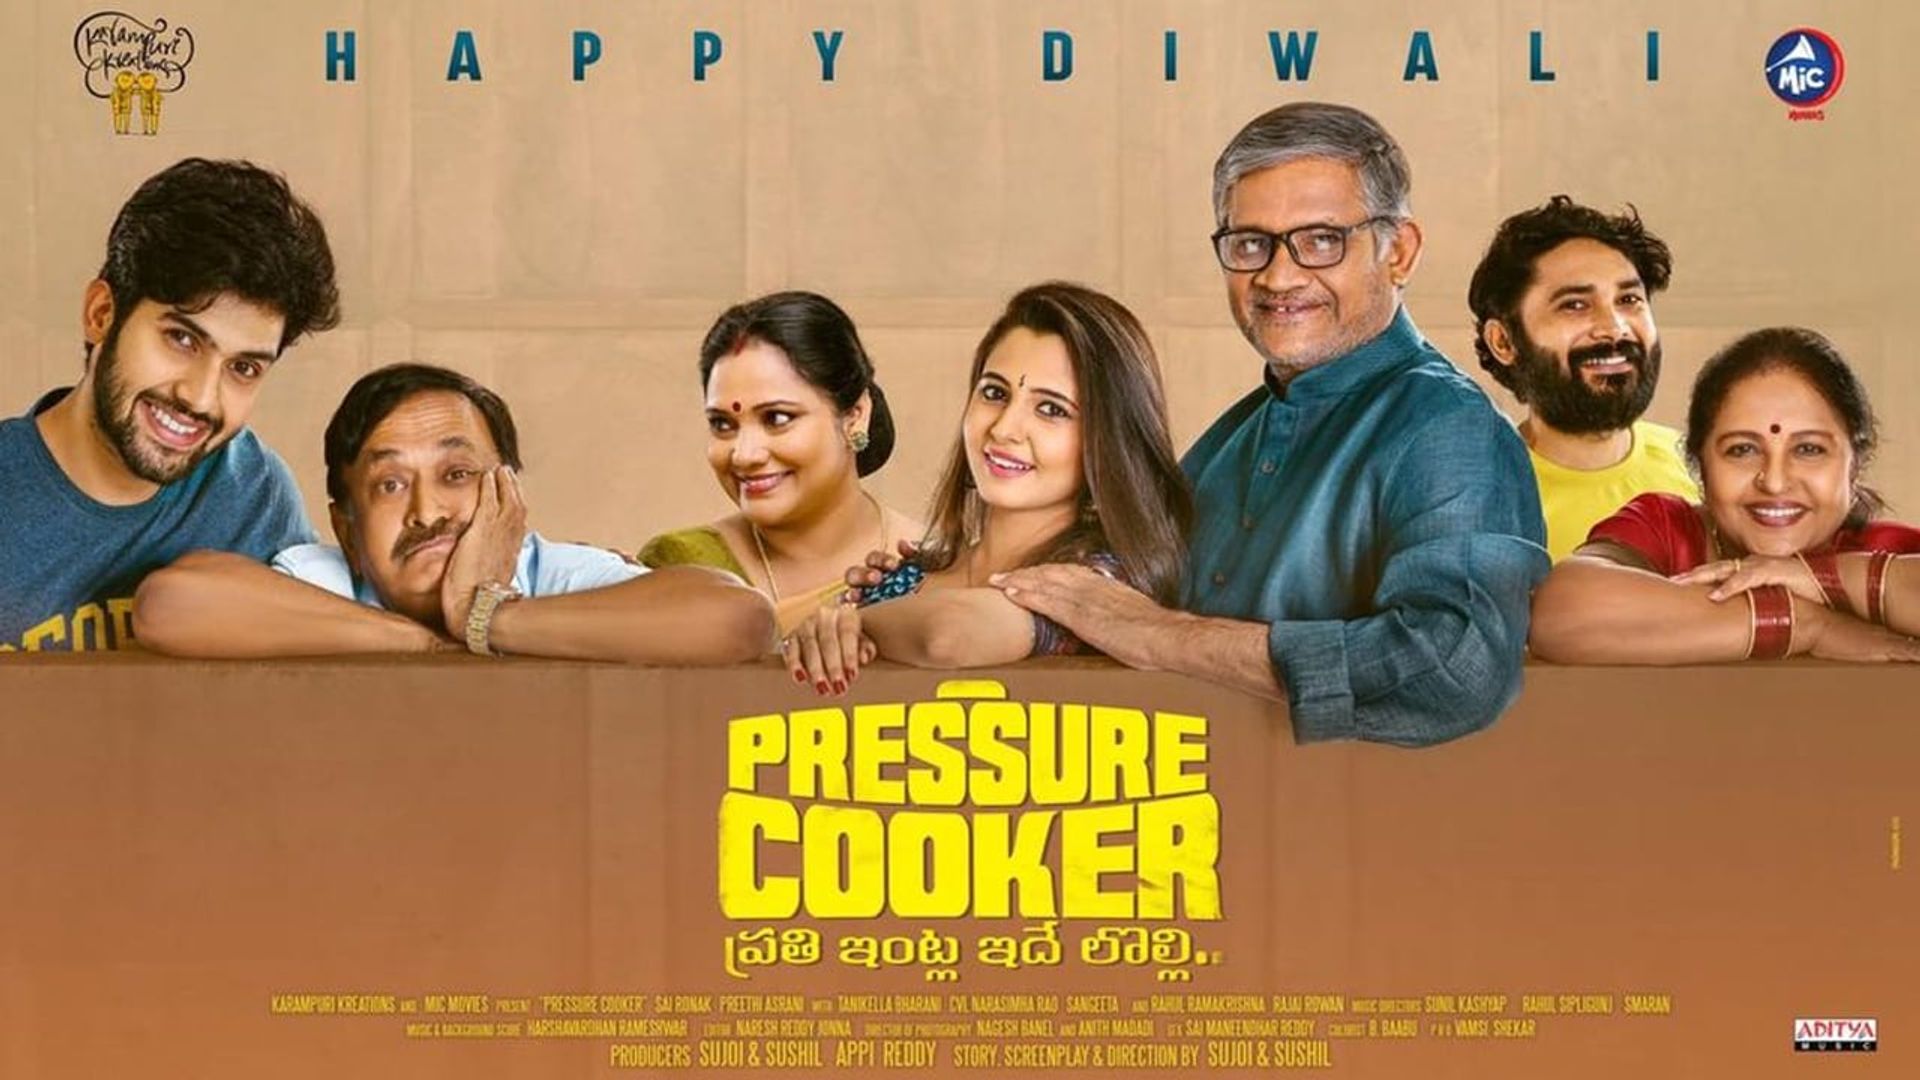 Pressure Cooker background